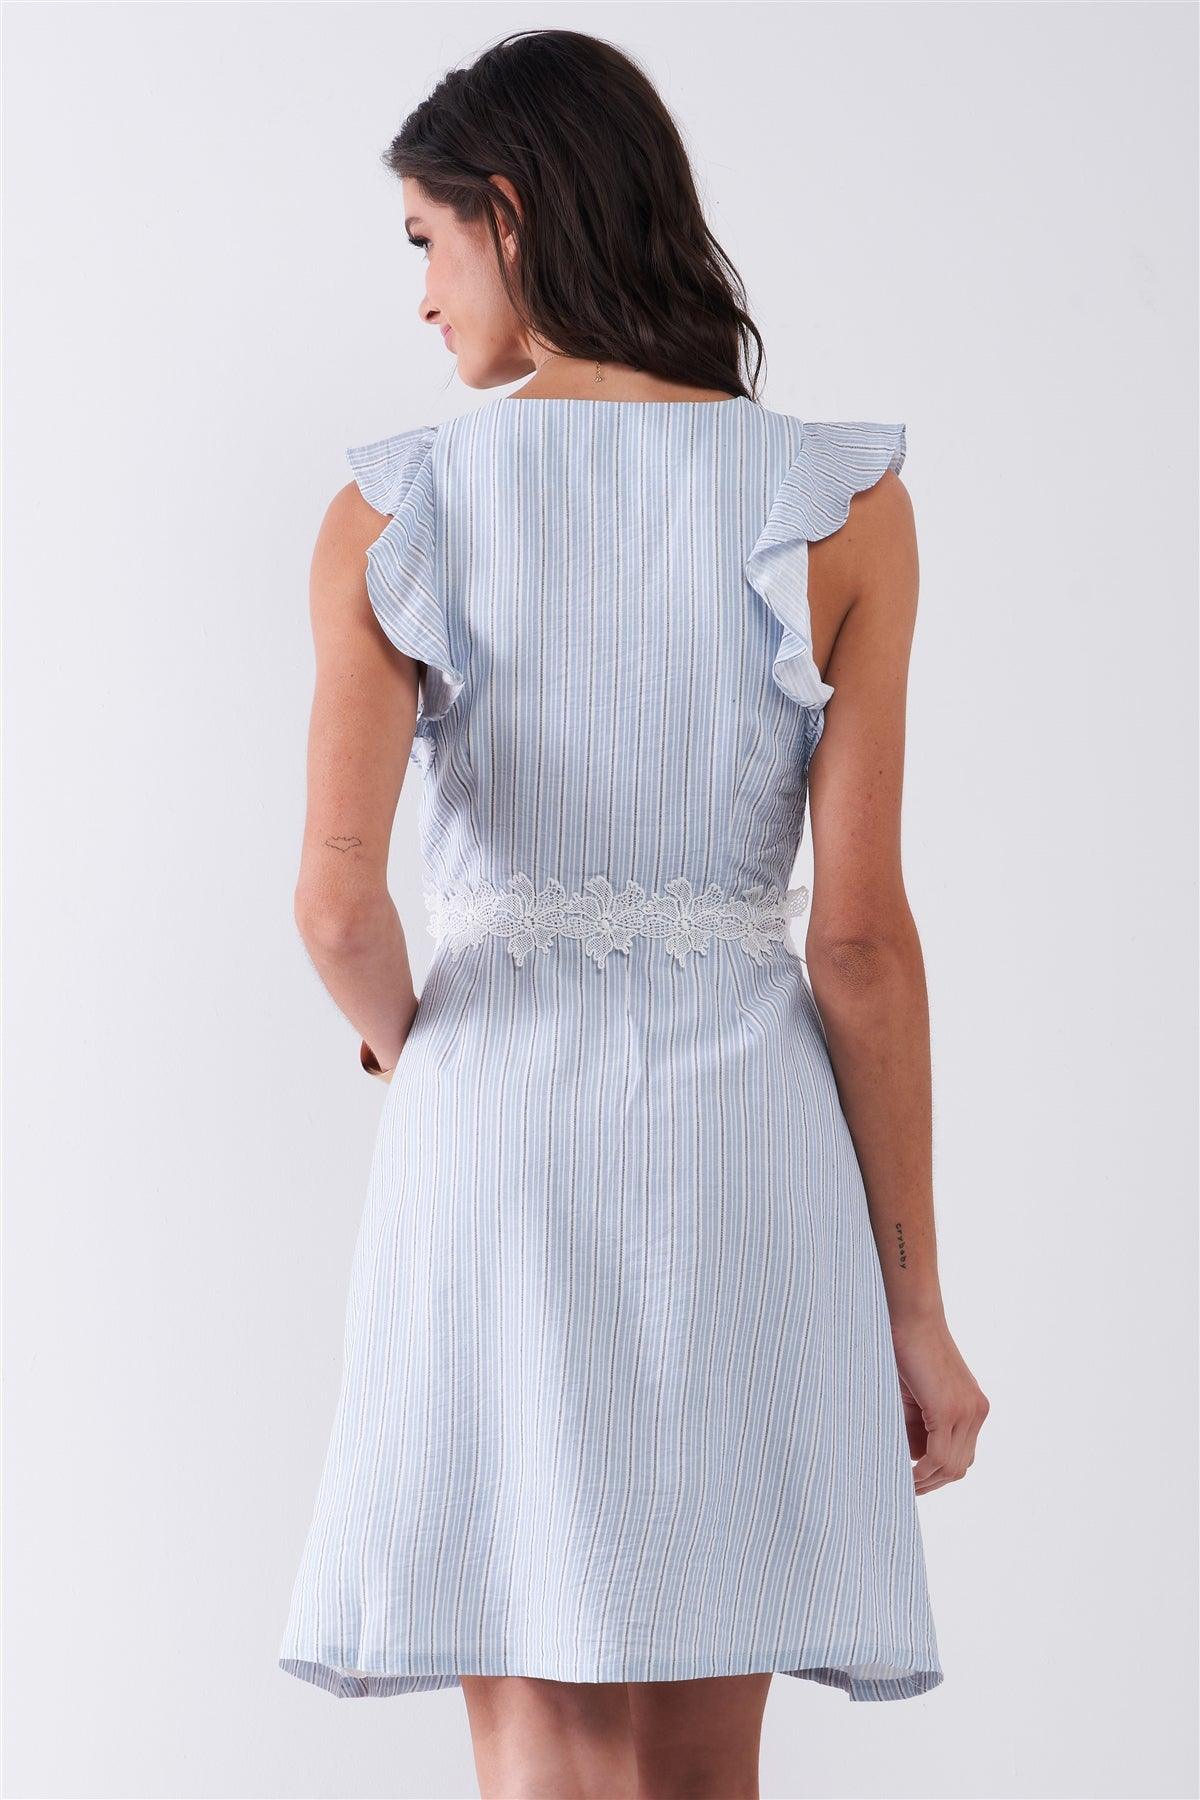 French Riviera Light Blue Striped Sleeveless Ruffle Floral Lace Trim Detail Self-Tie Waist Mini Dress